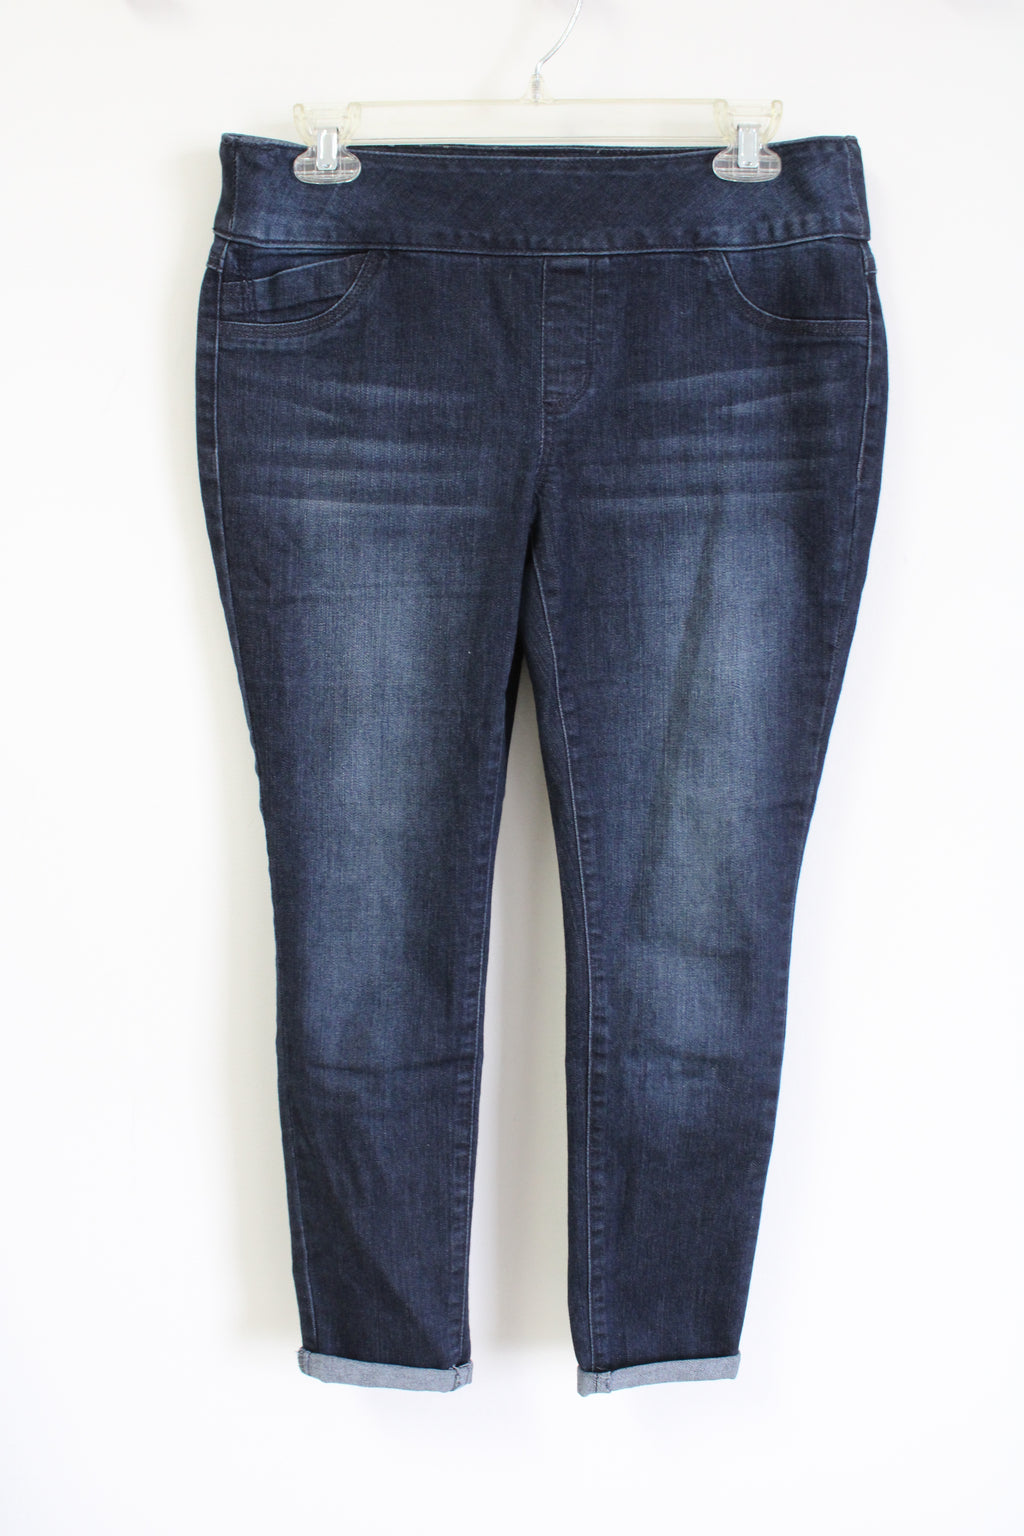 Westport Signature Fit Skinny Jeans | M Petite